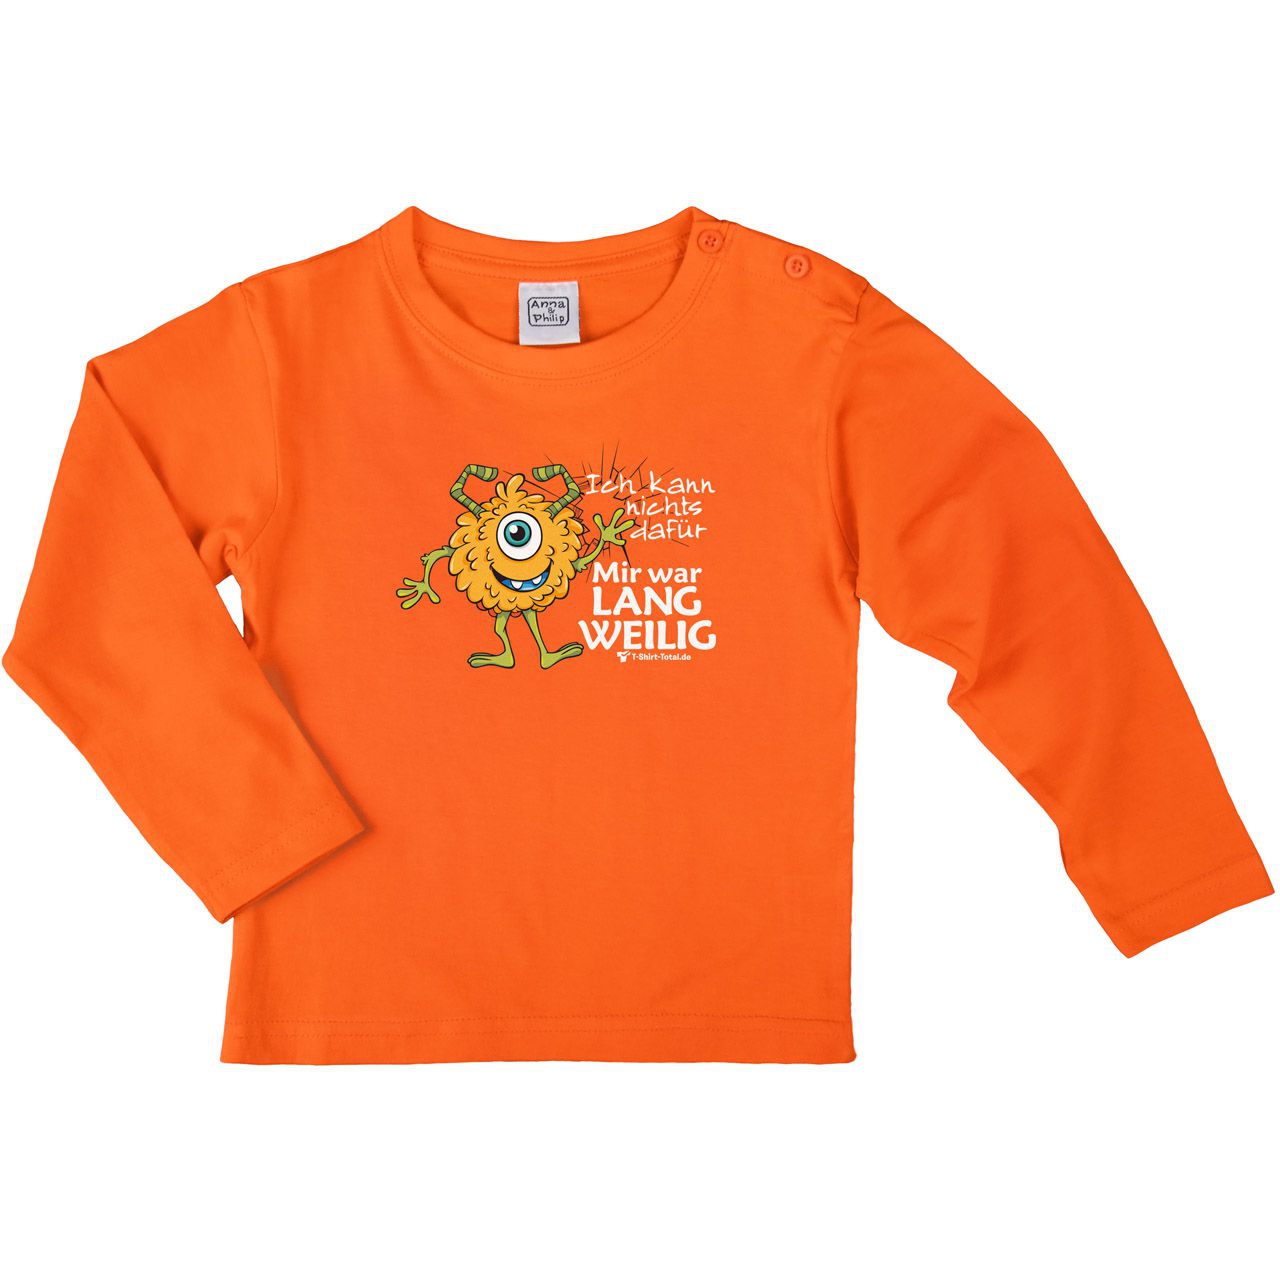 Mir war langweilig Kinder Langarm Shirt orange 122 / 128